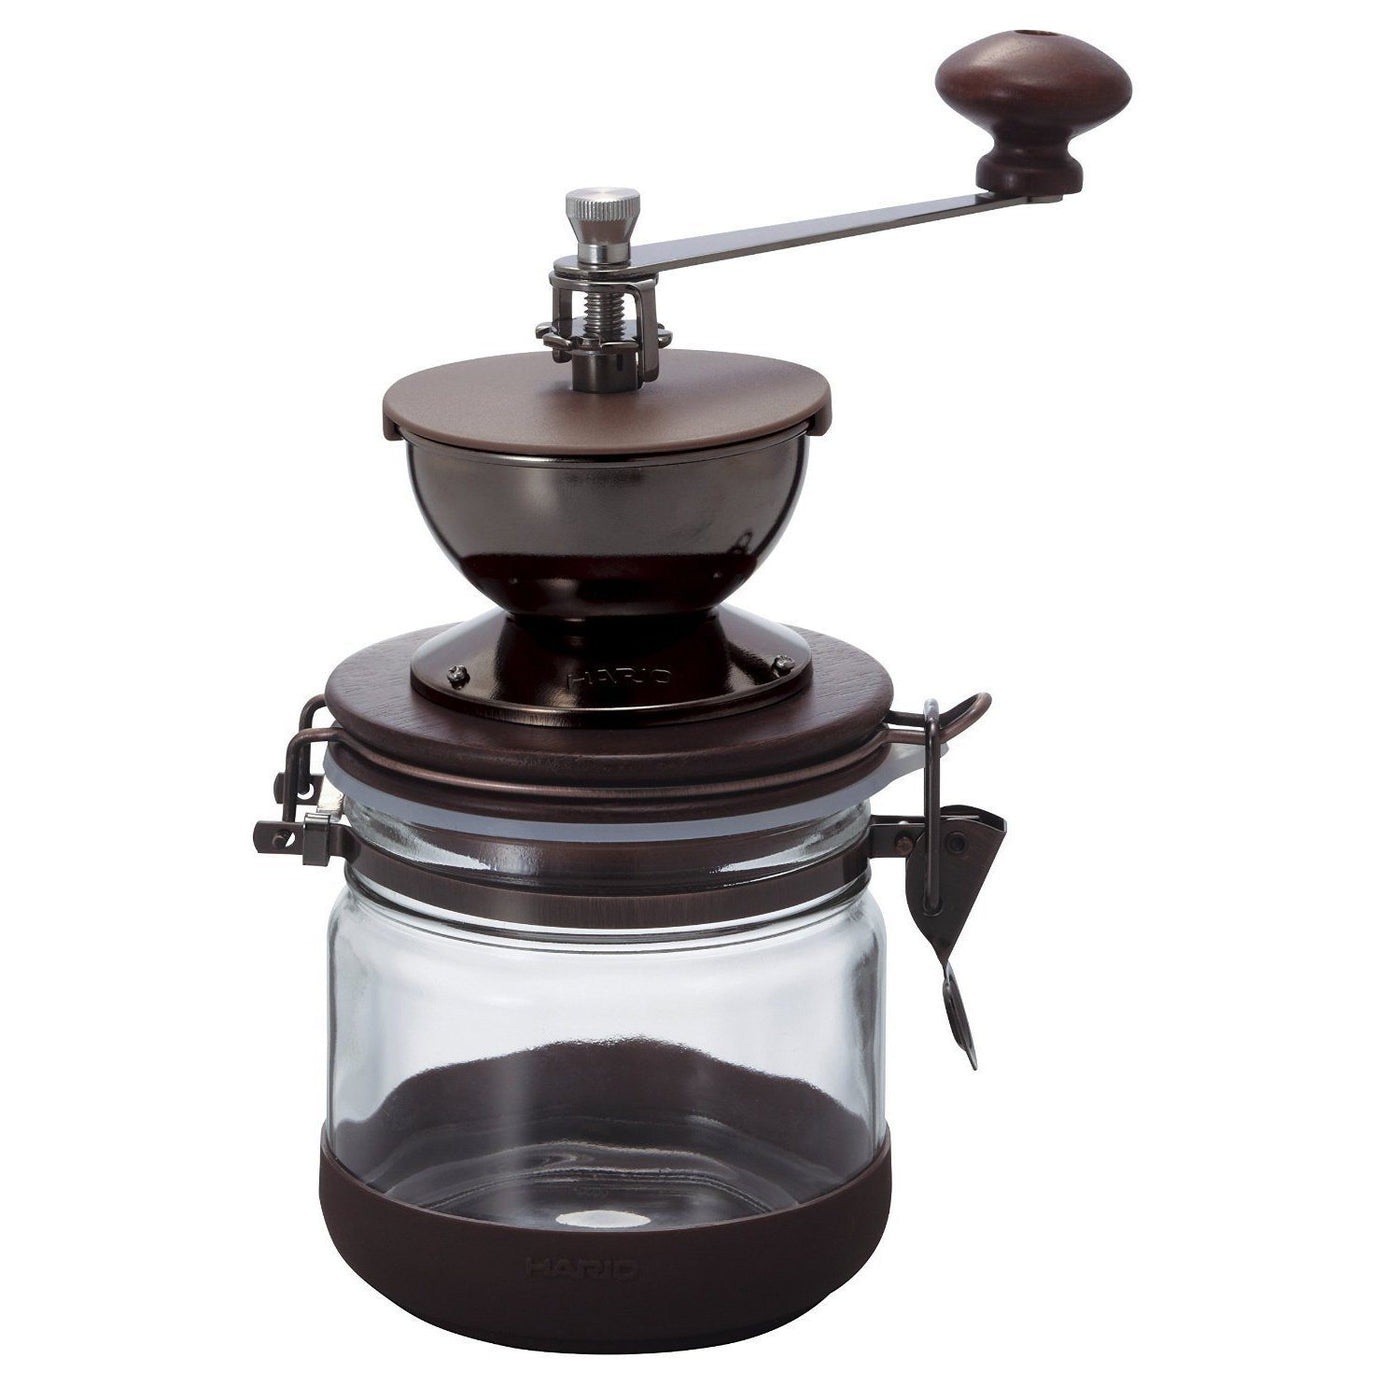 Ceramic Manual Coffee Grinder